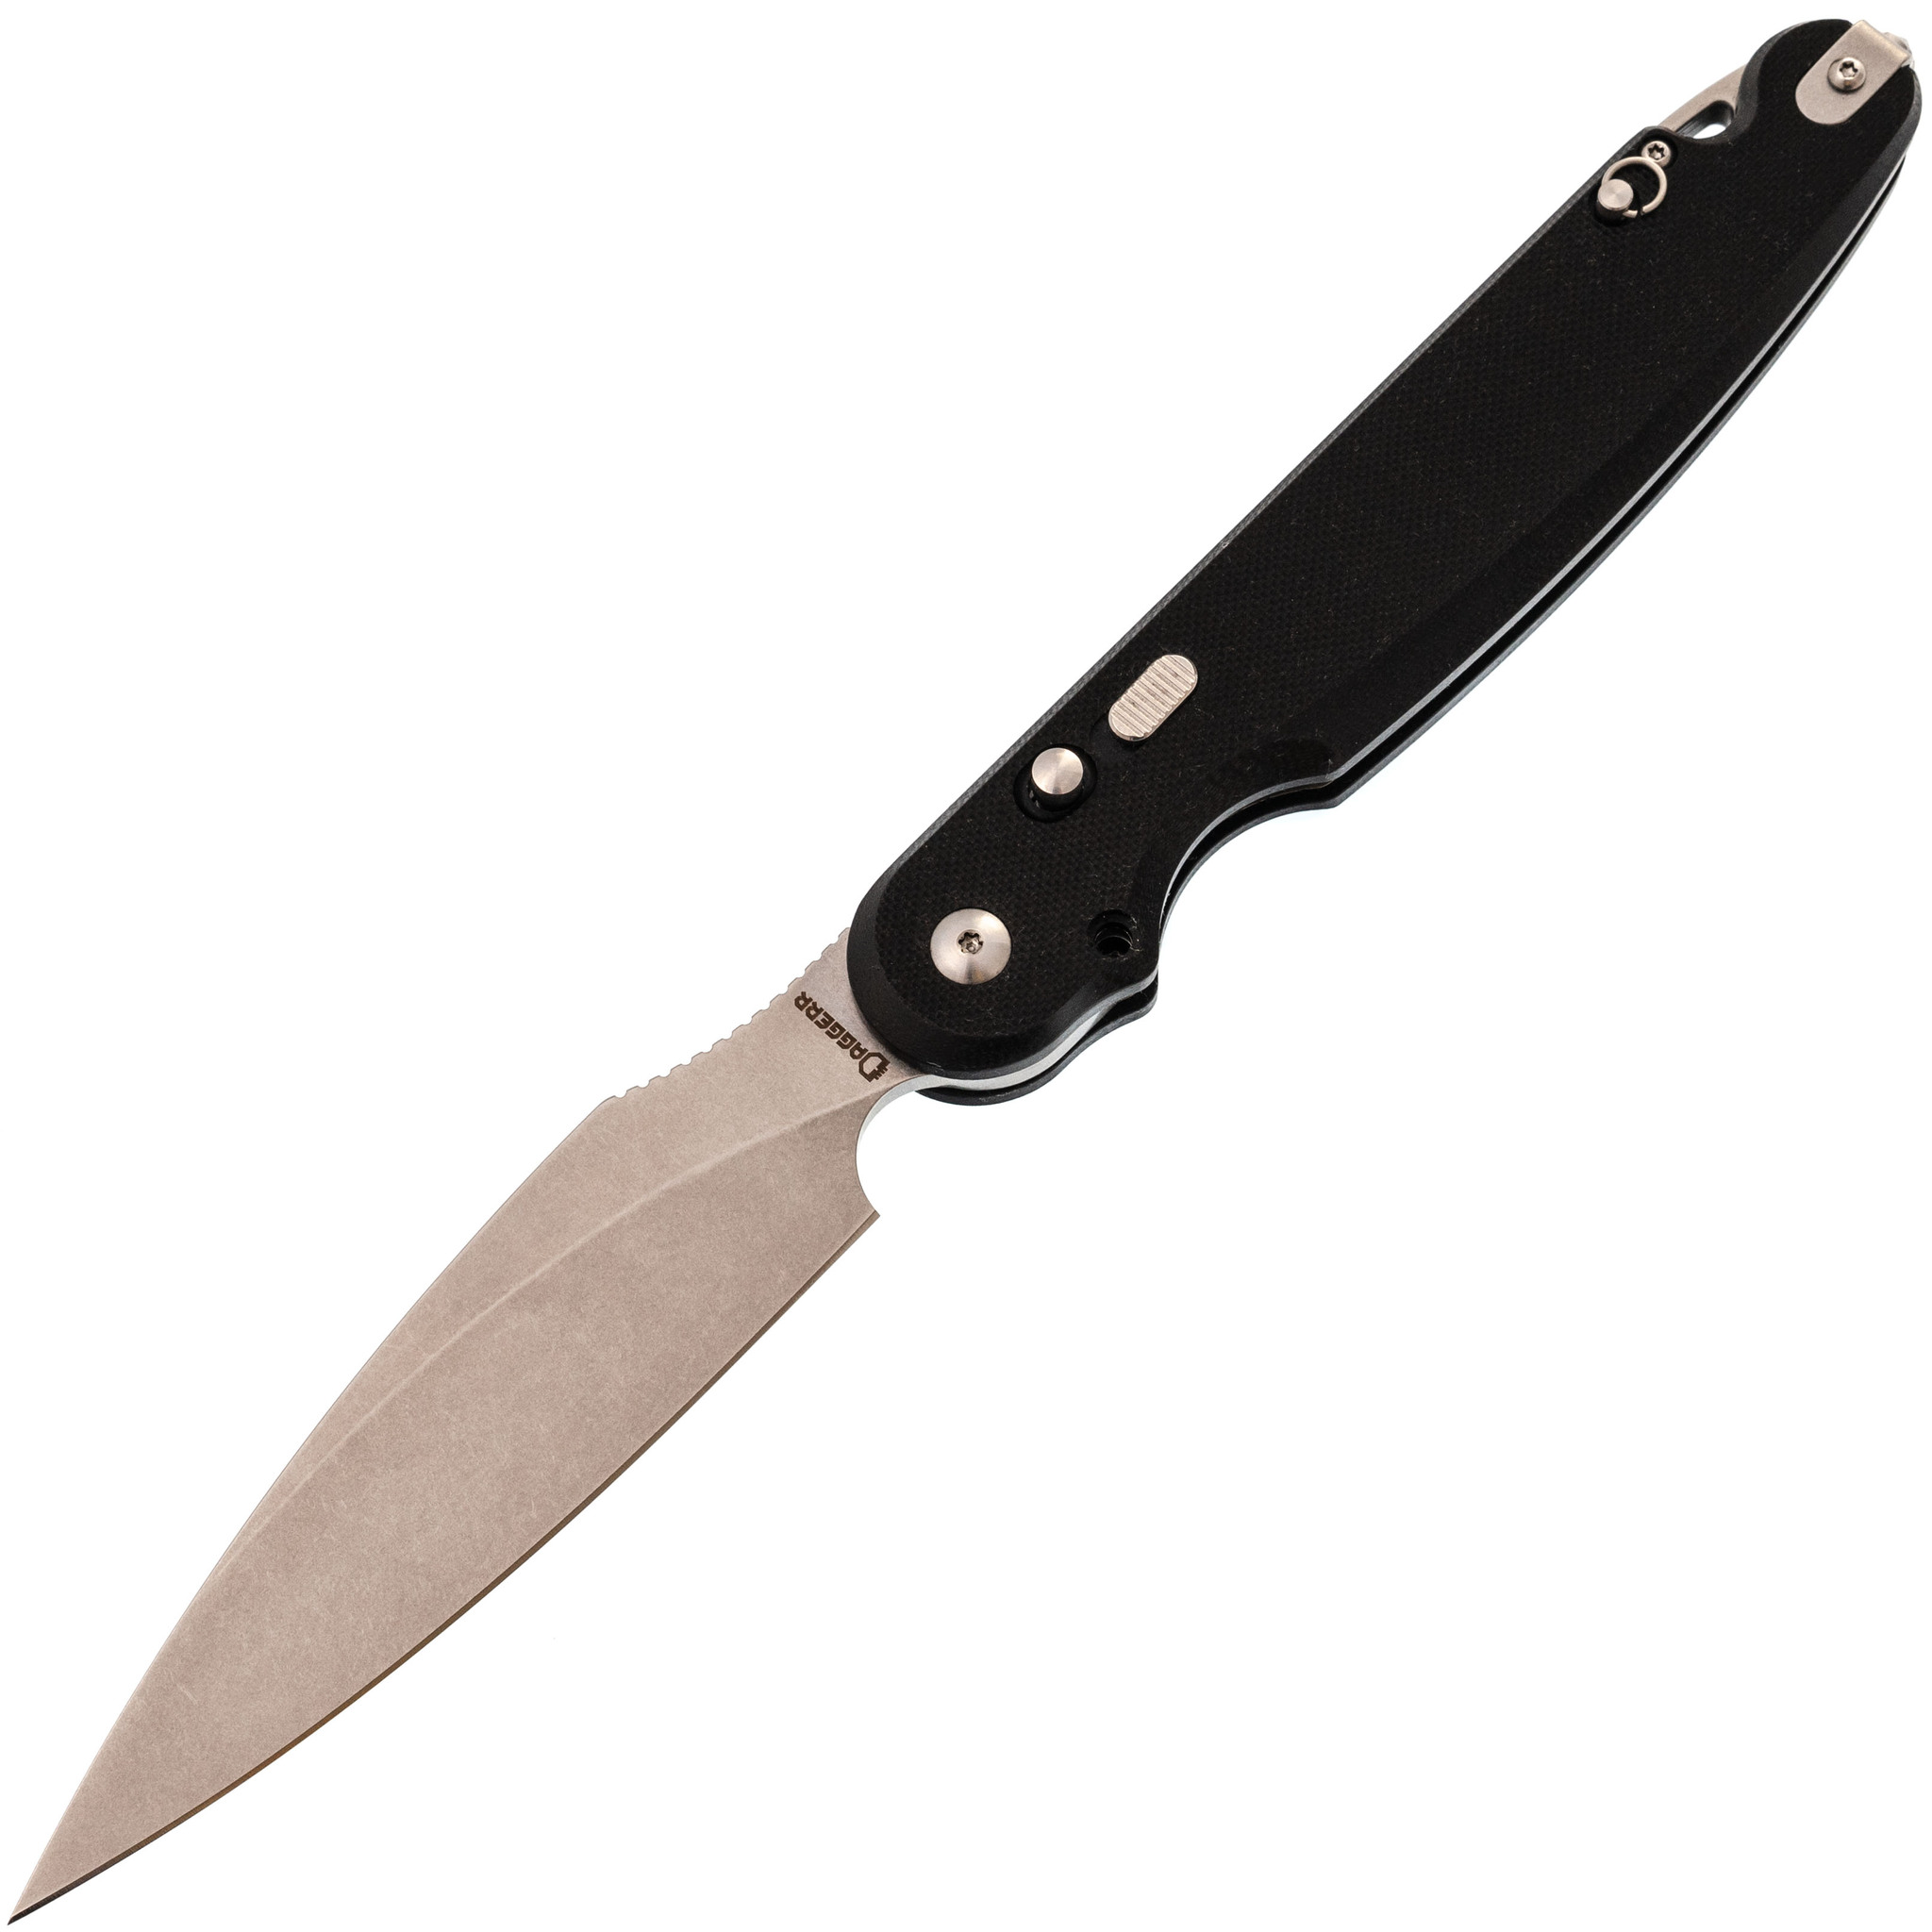 Складной нож Dagger Parrot Black SW, сталь VG10, рукоять G10 мангал складной grillux optimus stainless из нержавеющей стали